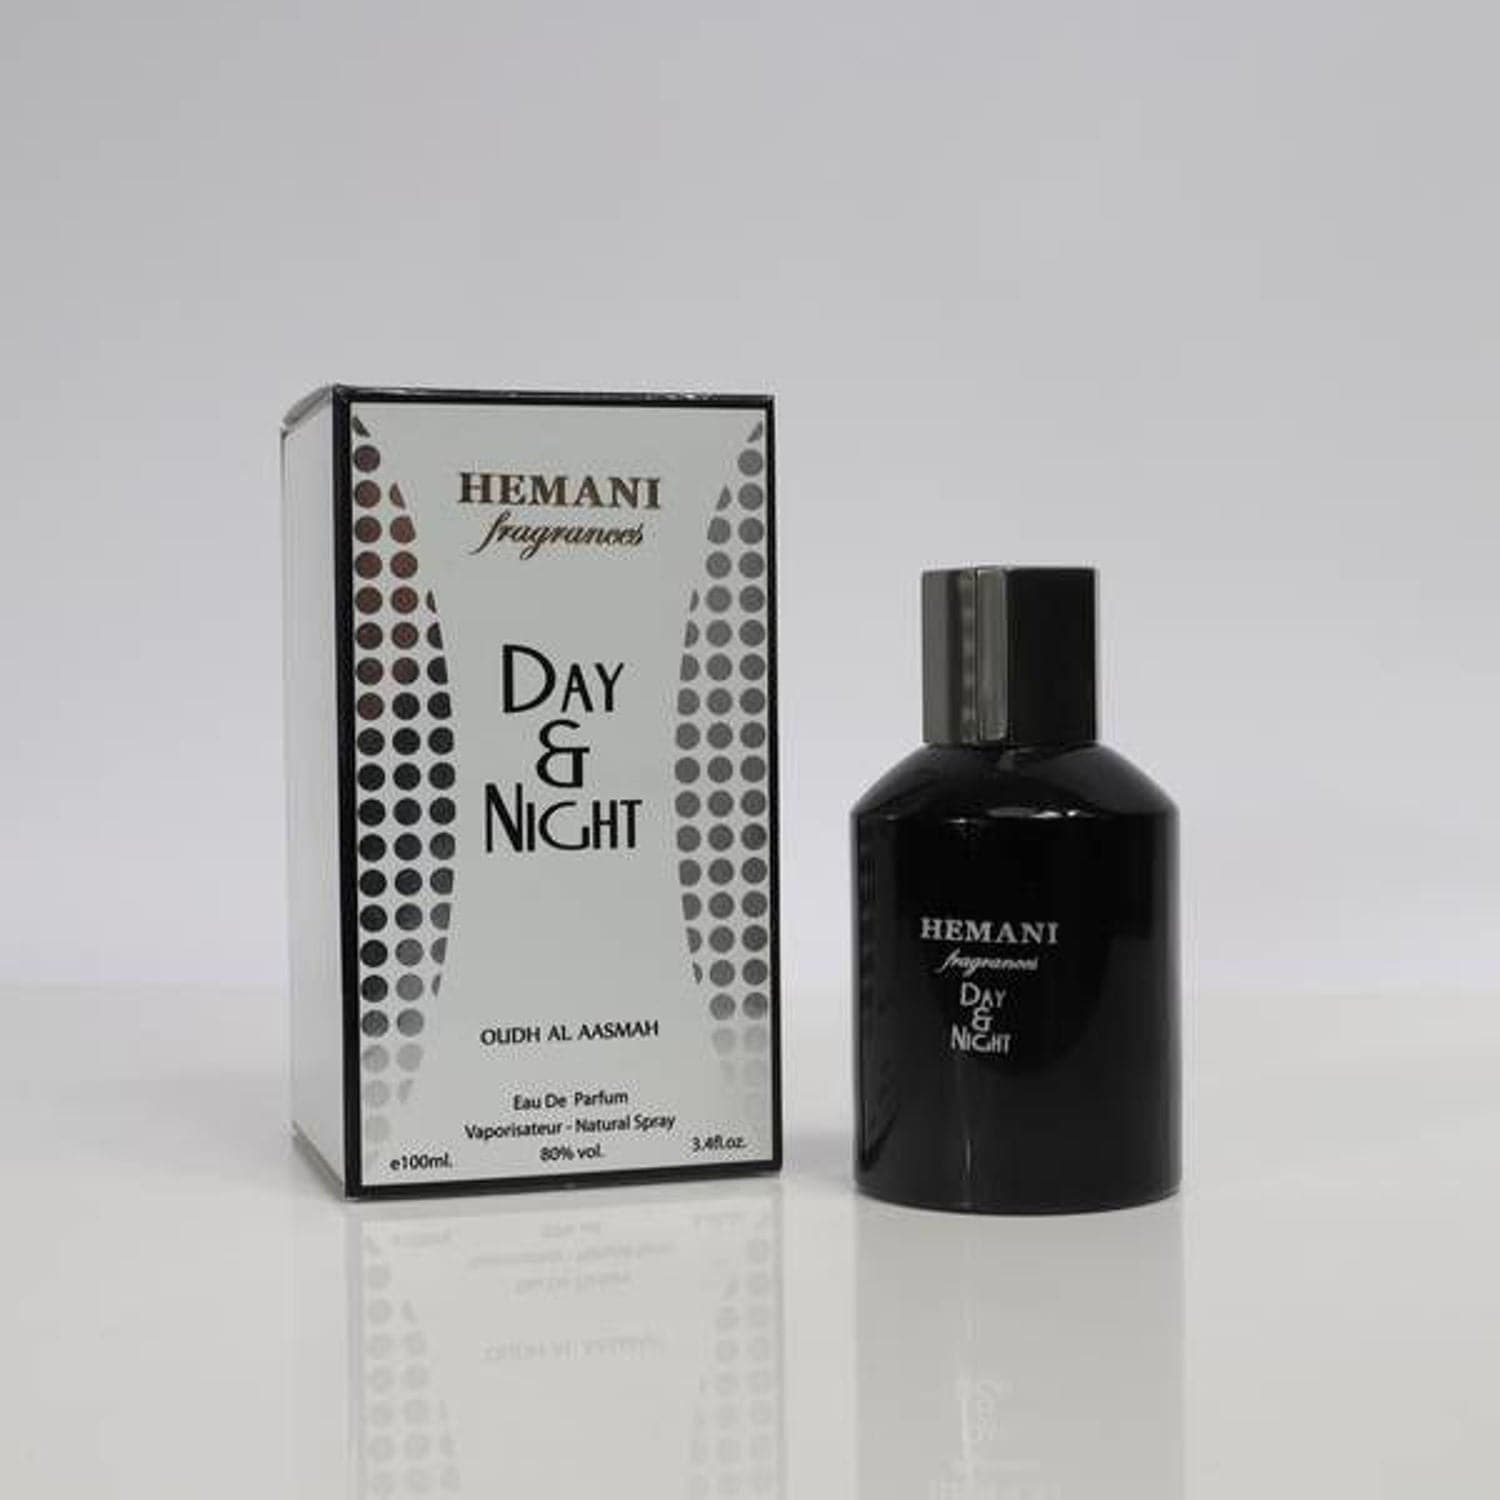 Hemani Day & Night Oudh Al Aasmah Perfume 80Ml - Premium  from Hemani - Just Rs 700.00! Shop now at Cozmetica